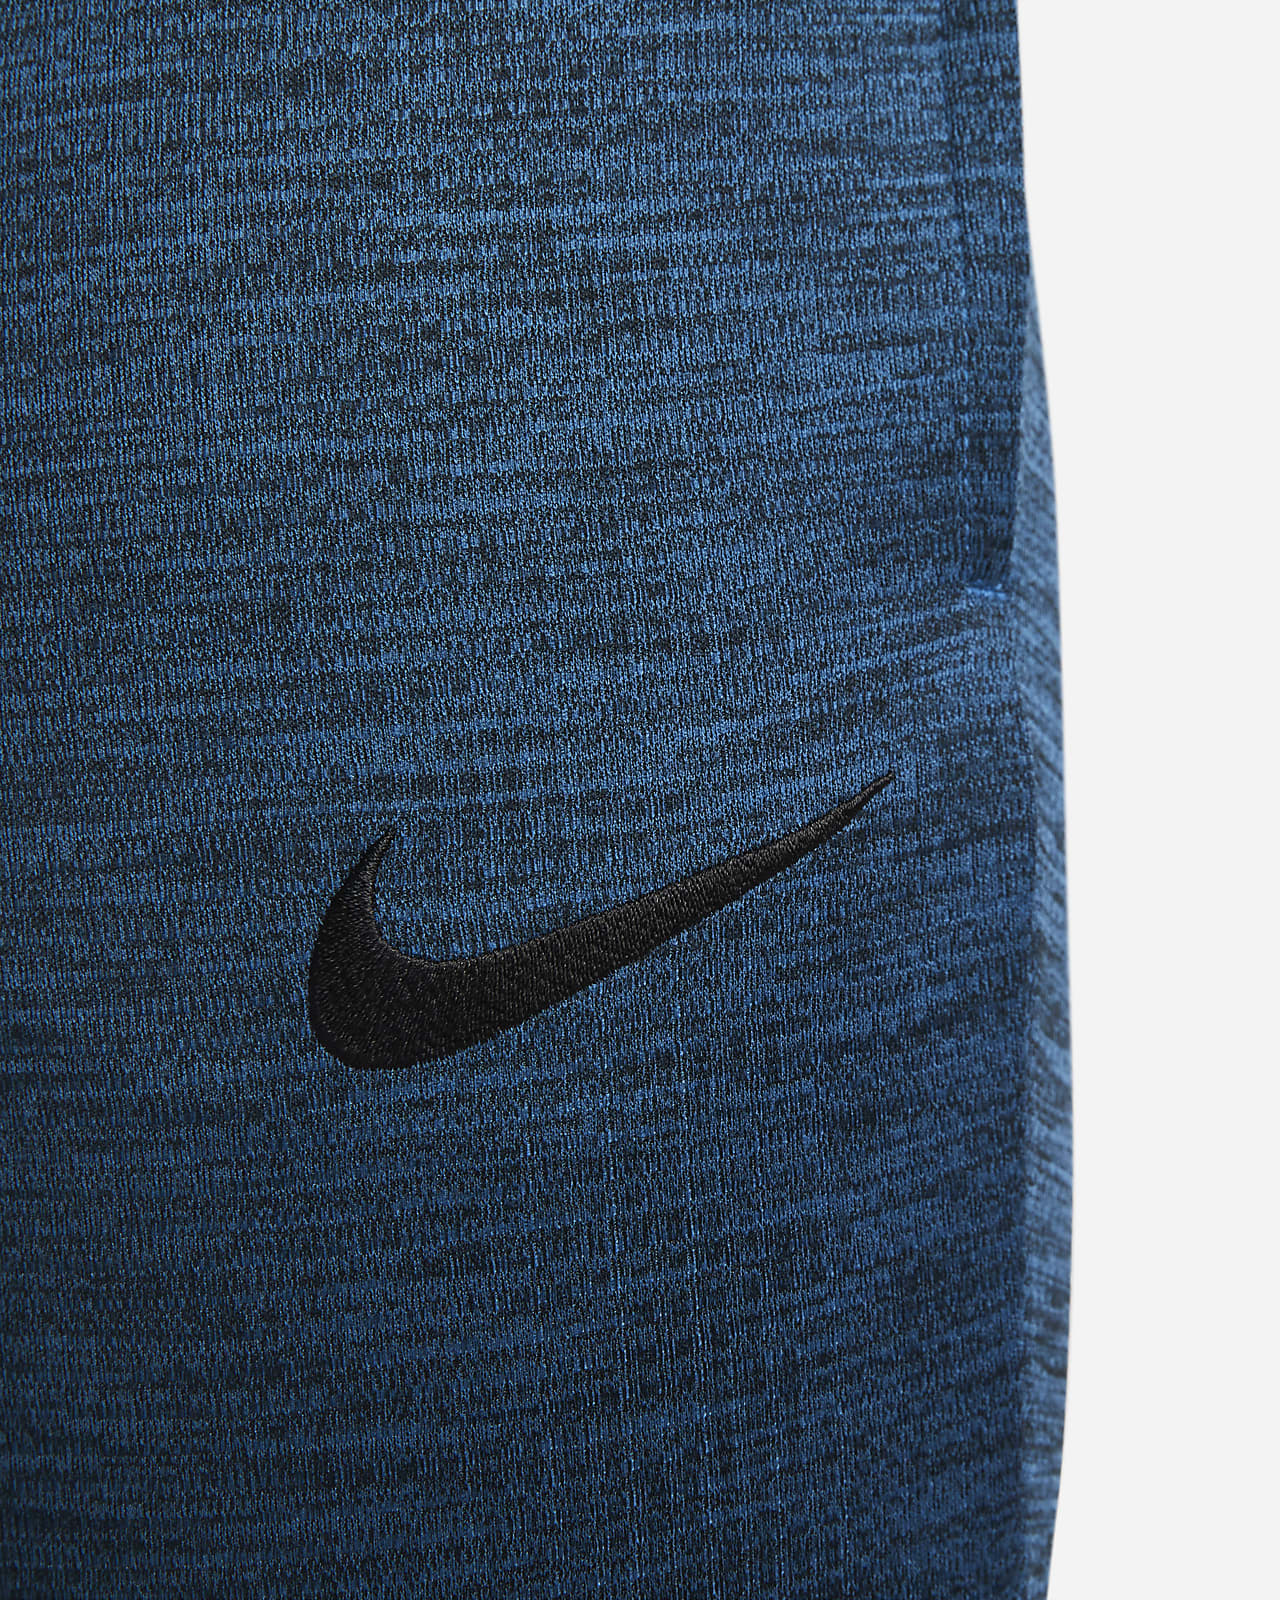 Pants de fútbol Dri-FIT para hombre Nike Academy